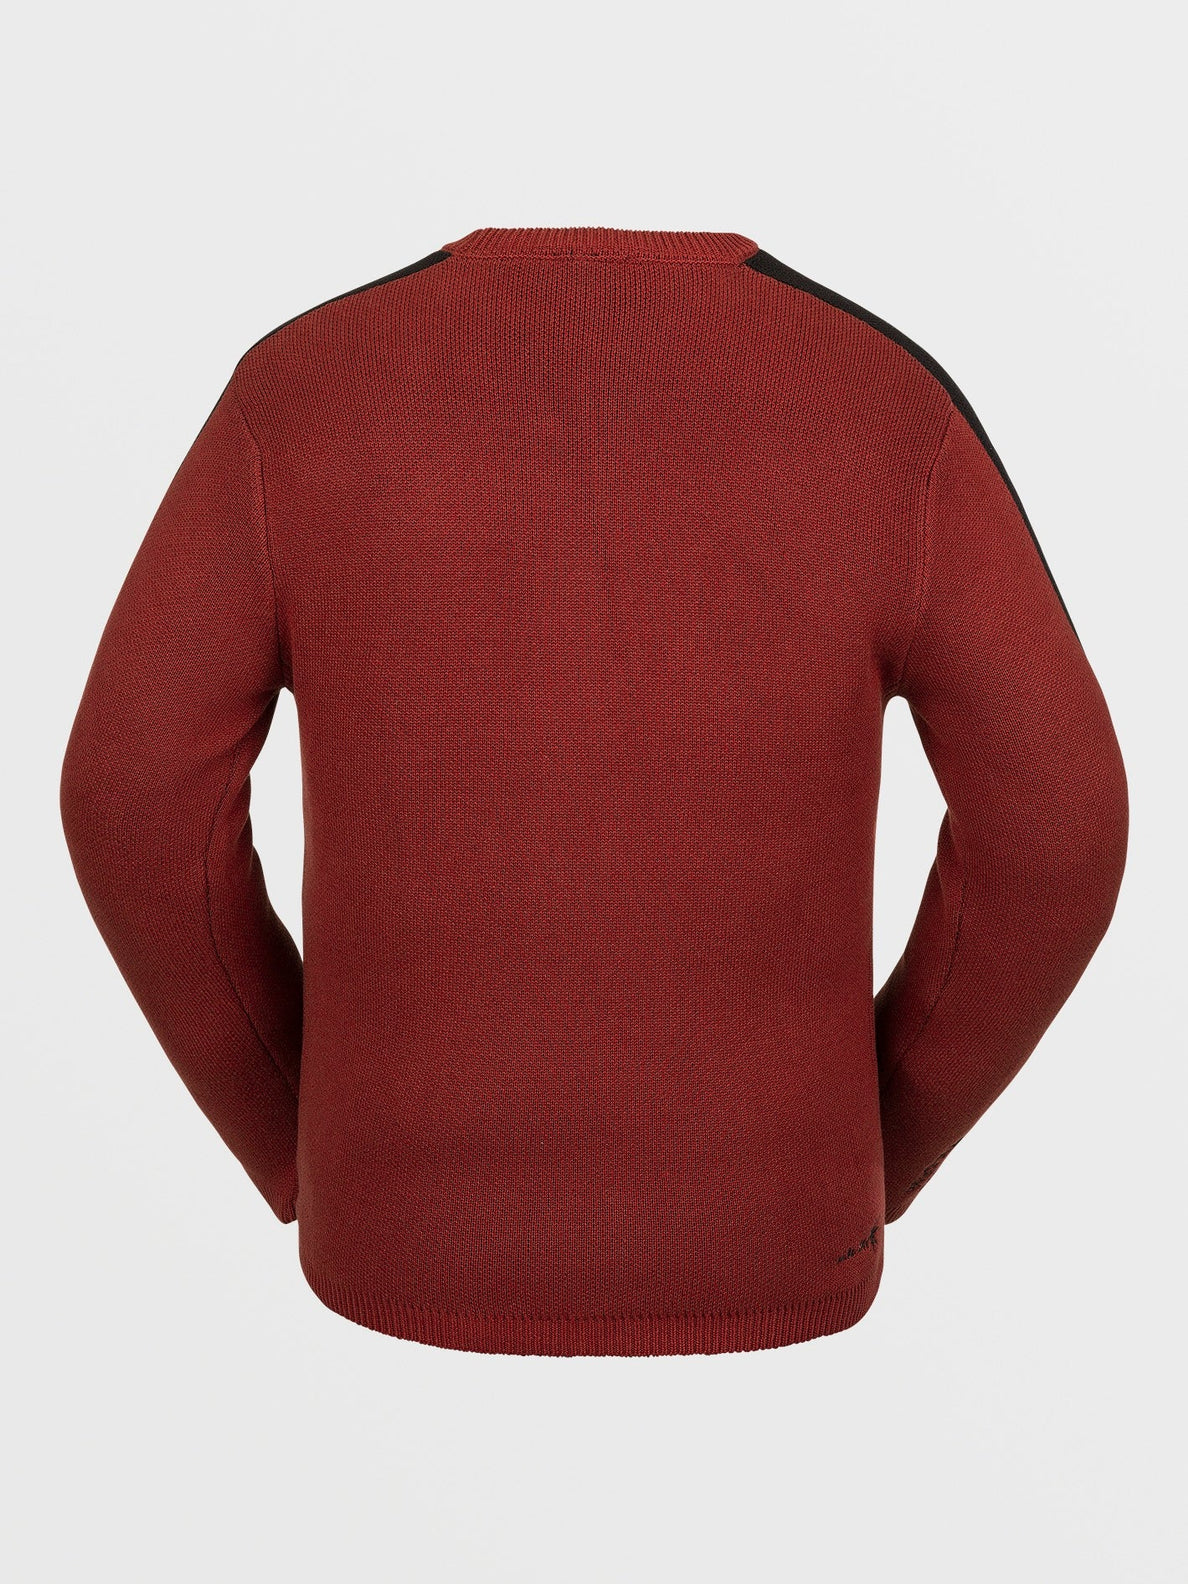 Ravelson Sweater - MAROON (G0752401_MAR) [B]